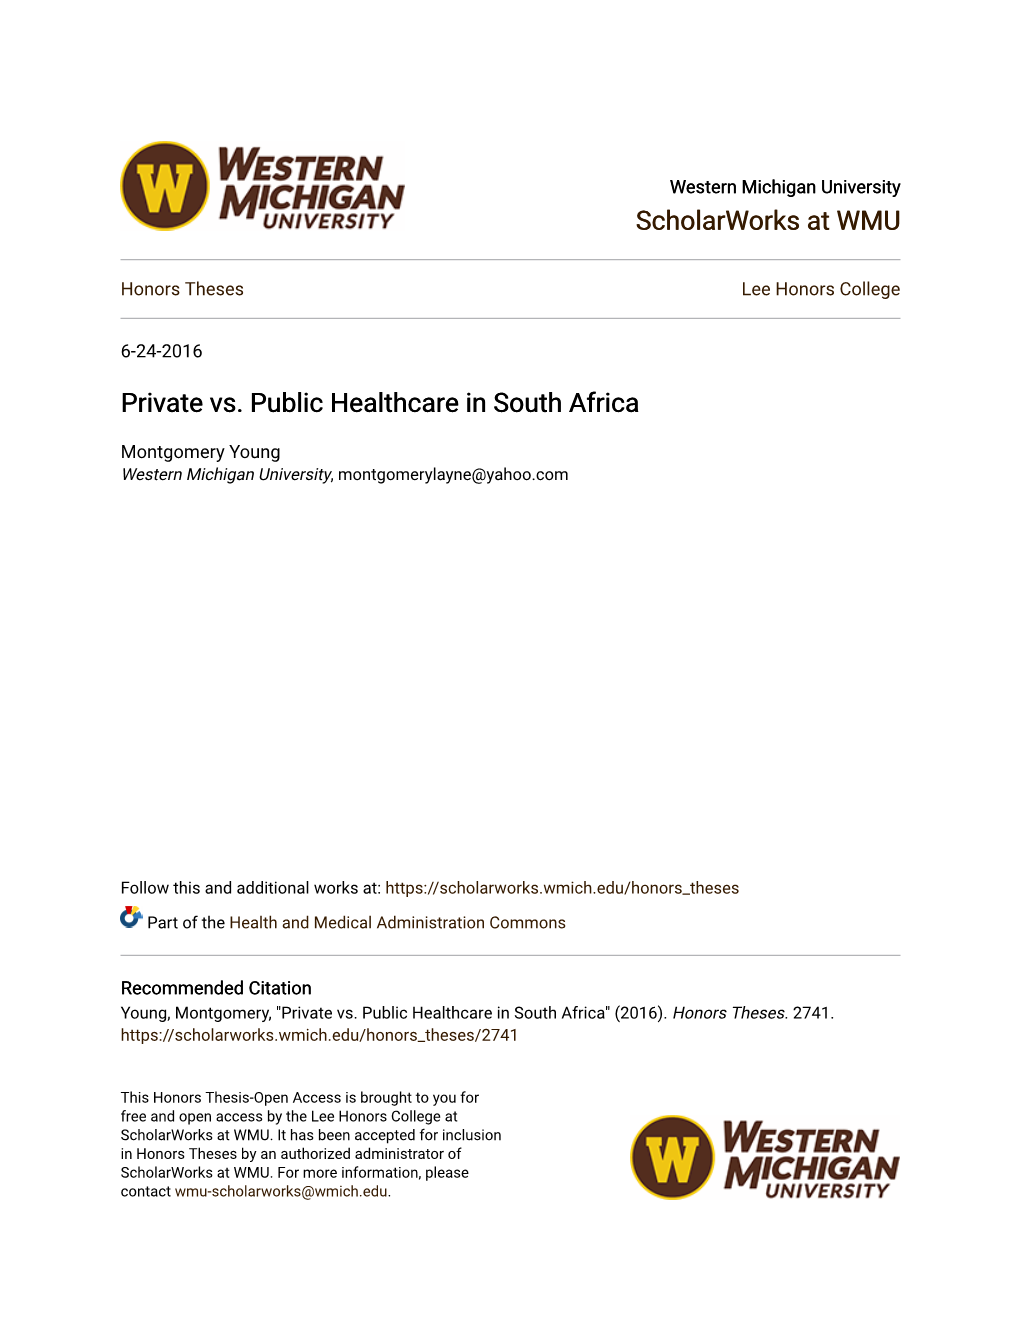 Private Vs. Public Healthcare in South Africa